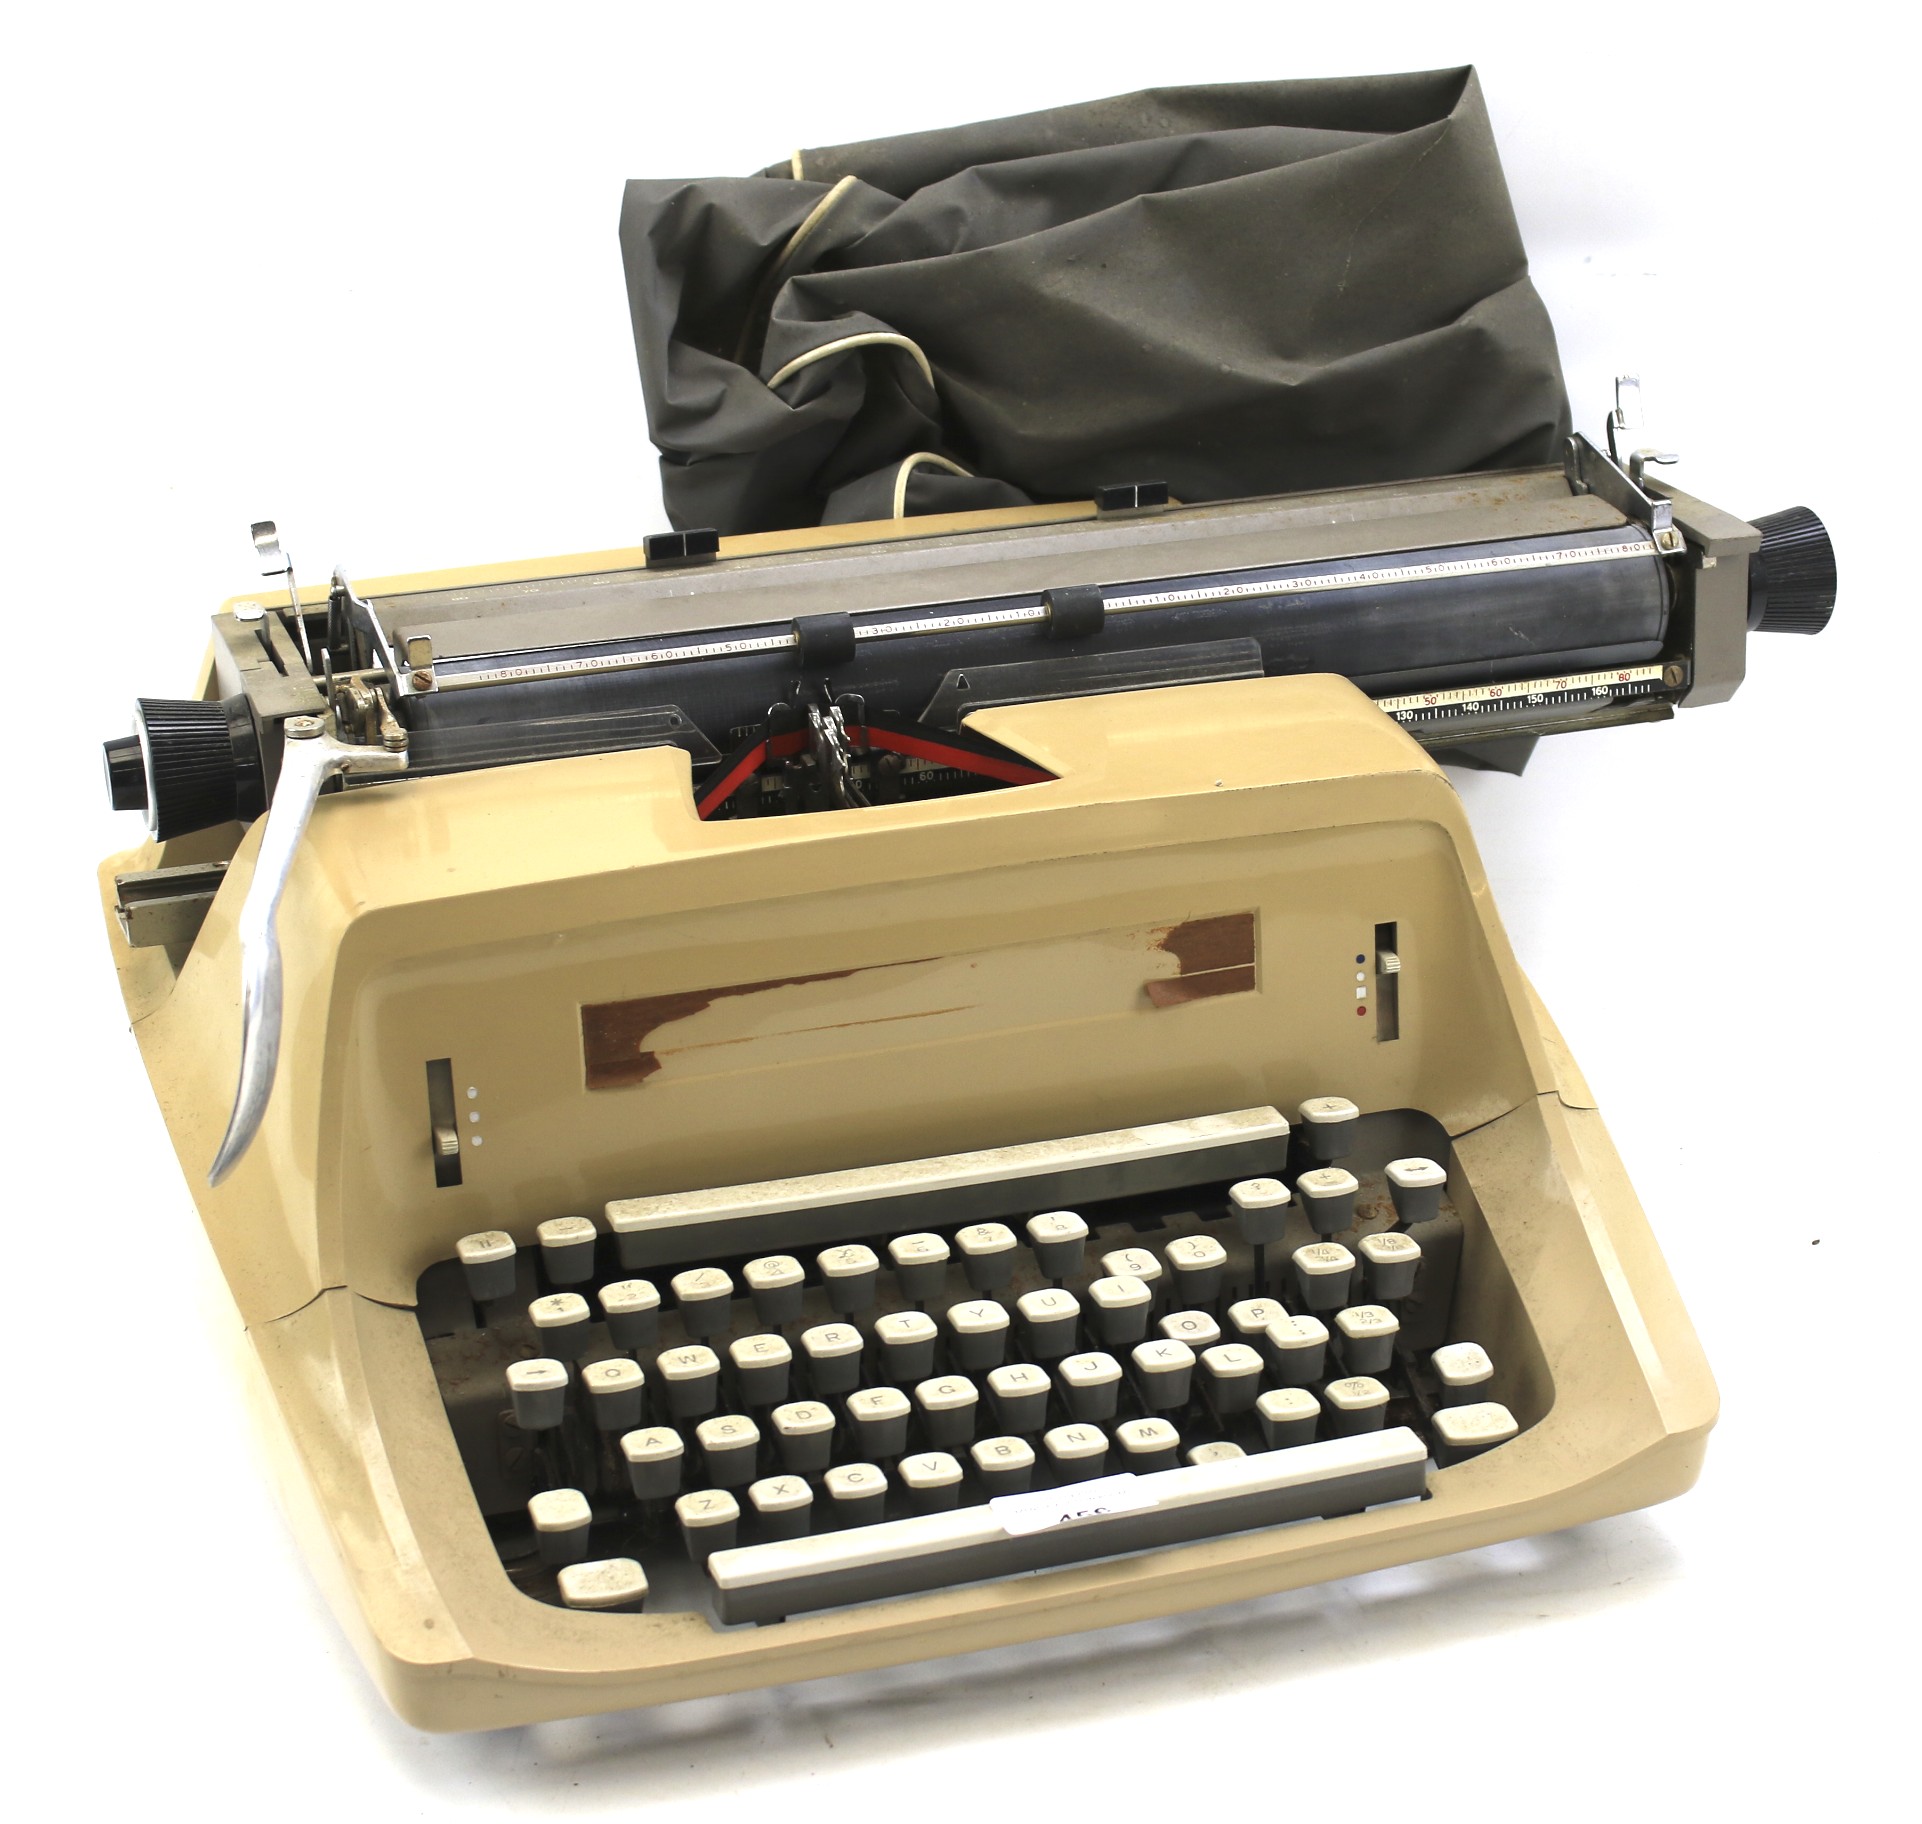 A Remington Sperry Rand typewriter.